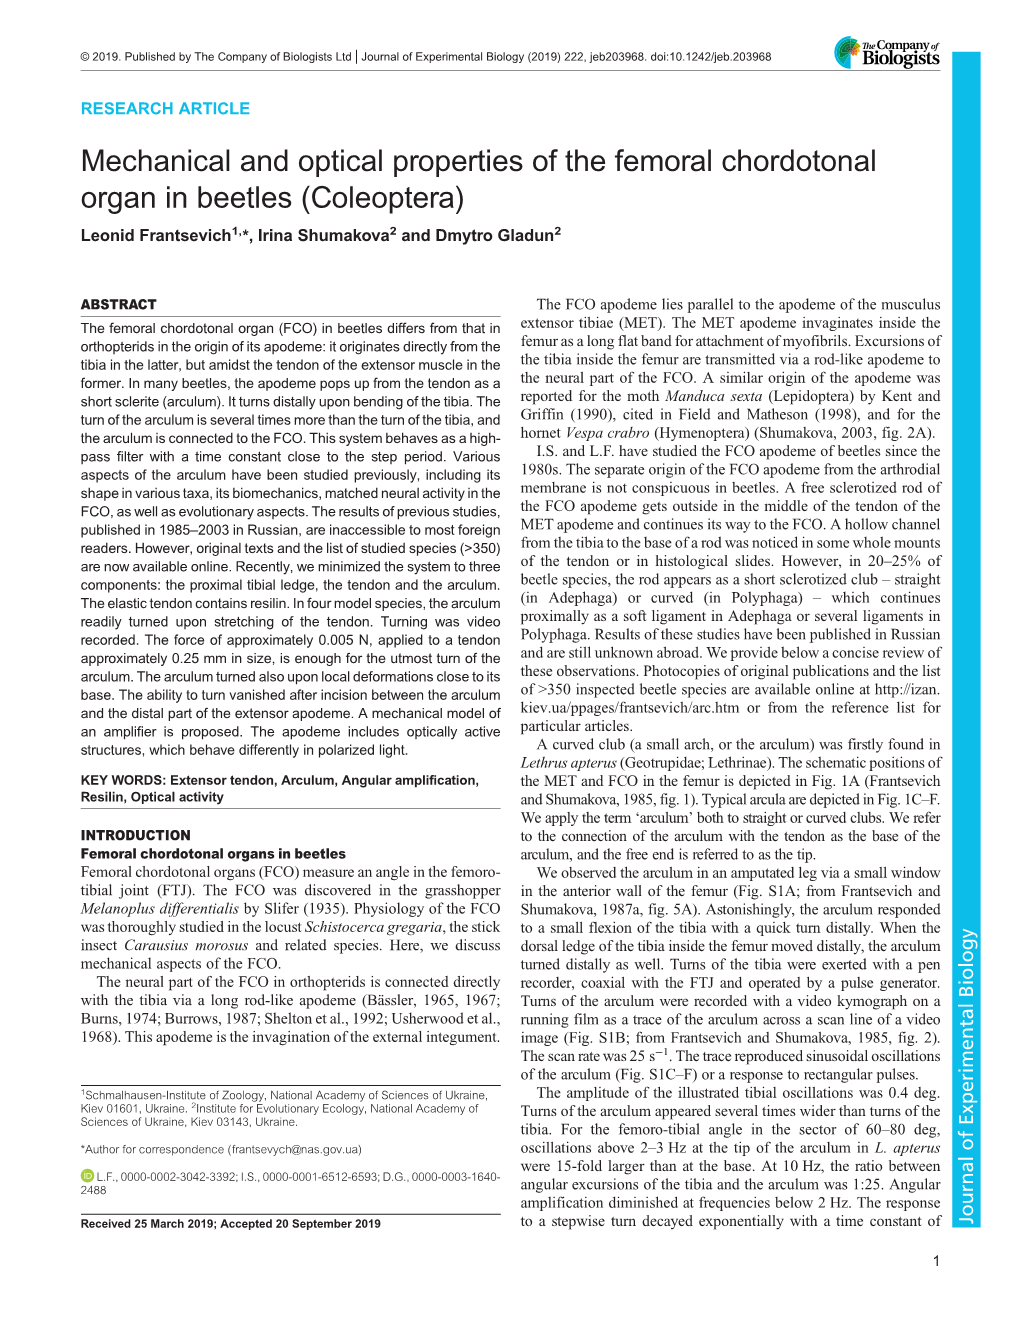 Mechanical and Optical Properties of the Femoral Chordotonal Organ in Beetles (Coleoptera) Leonid Frantsevich1,*, Irina Shumakova2 and Dmytro Gladun2